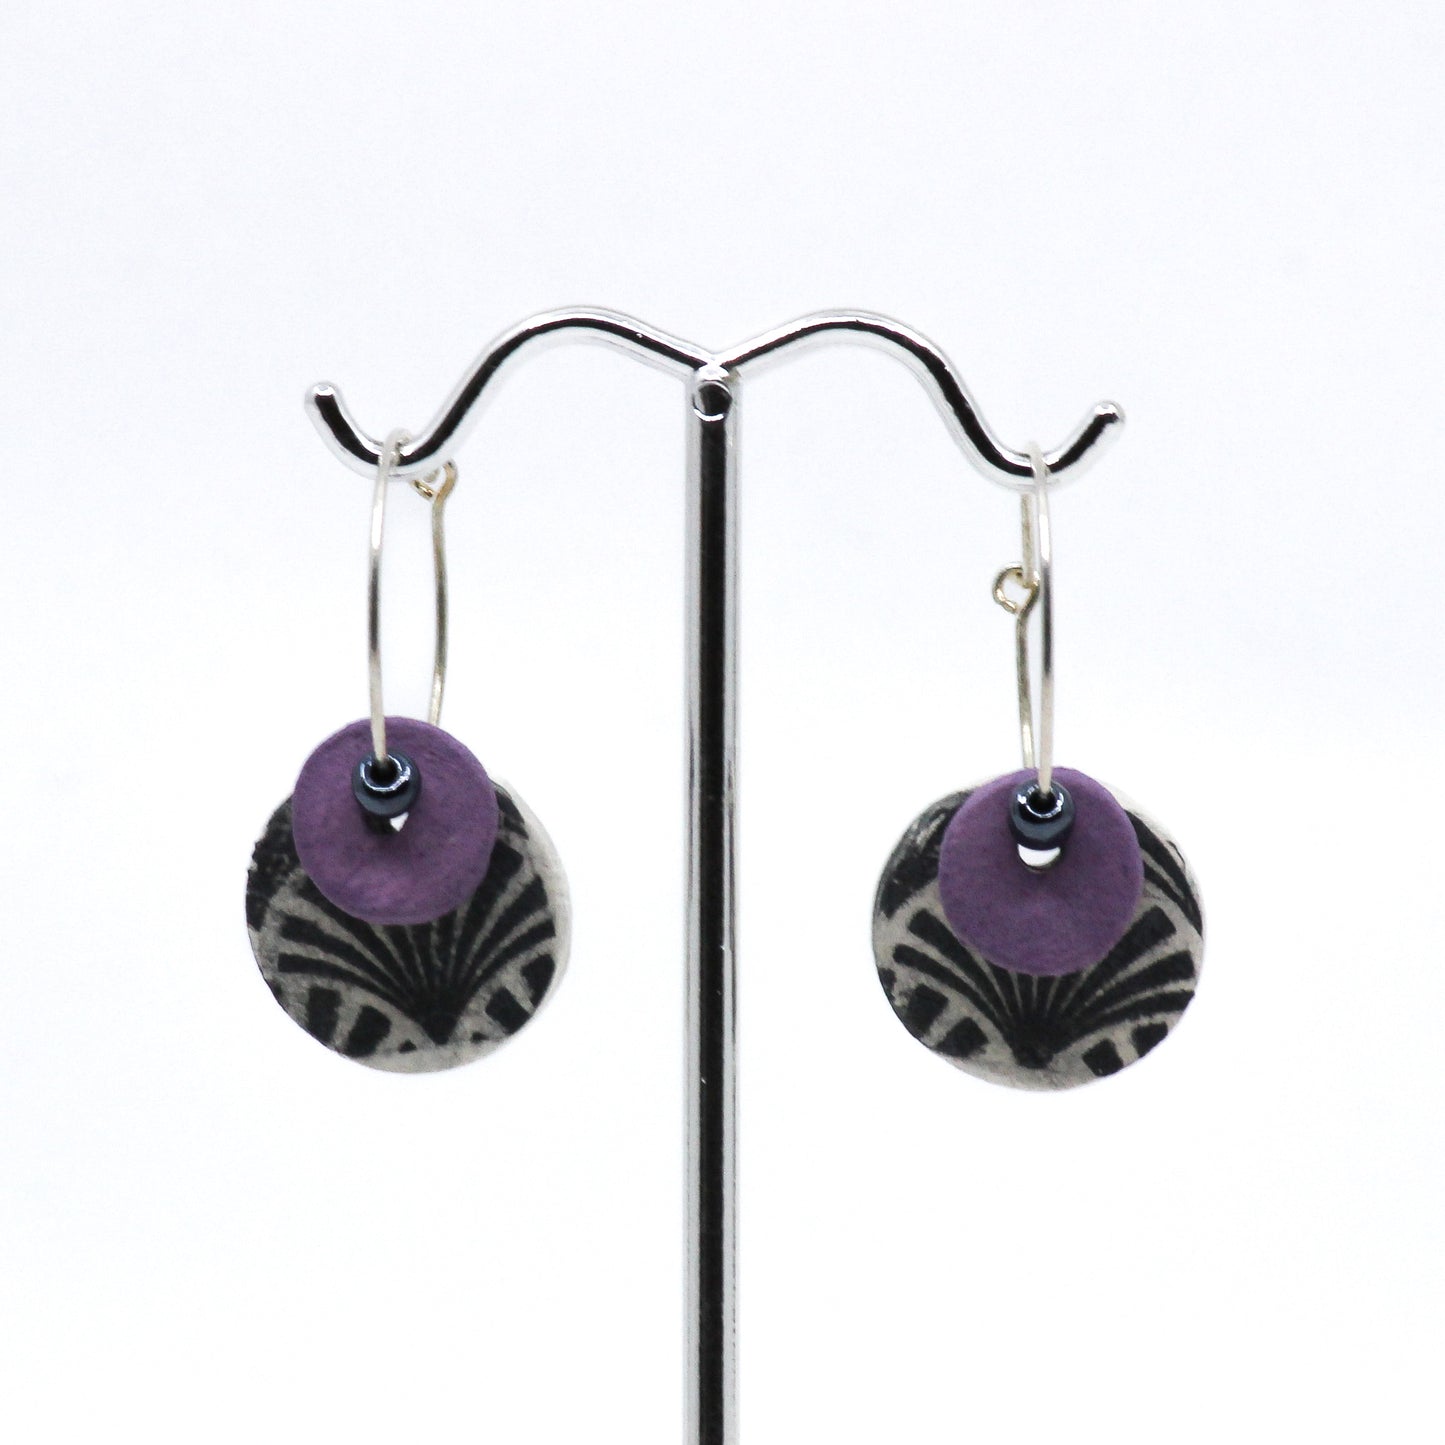 Purple, black and white earrings